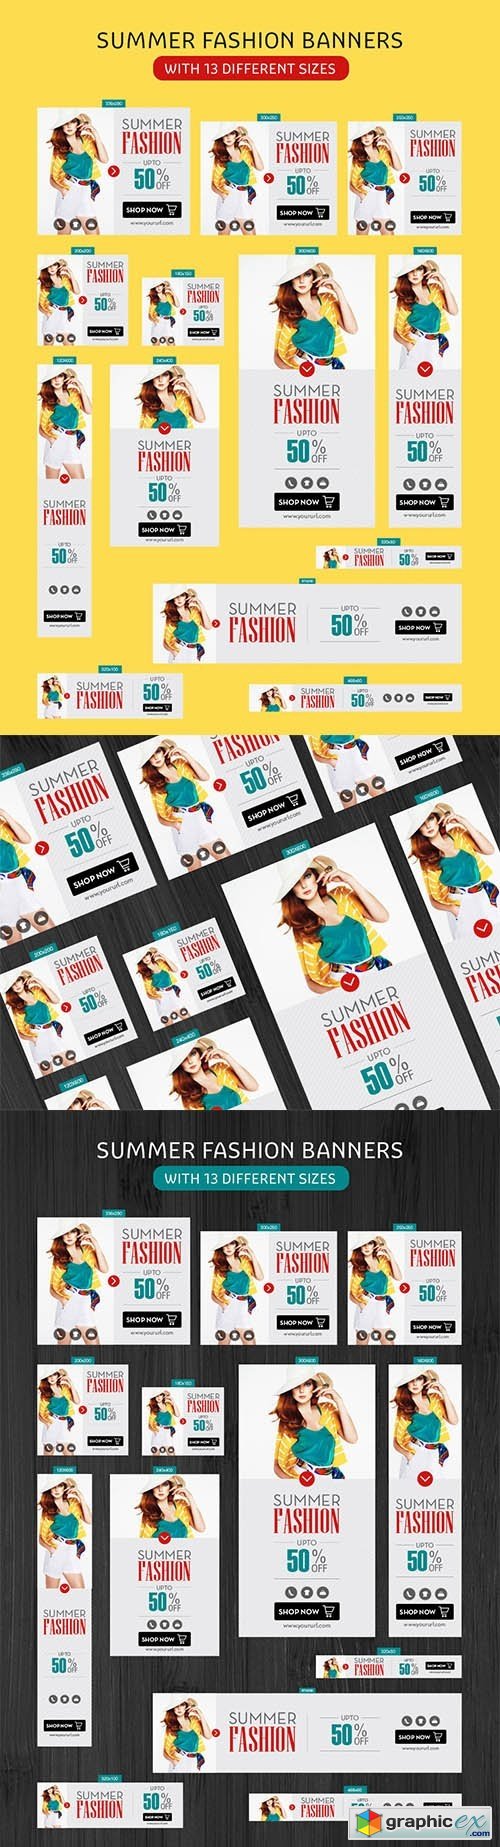 Ai Vector Templates - Summer Fashion Banners 2016